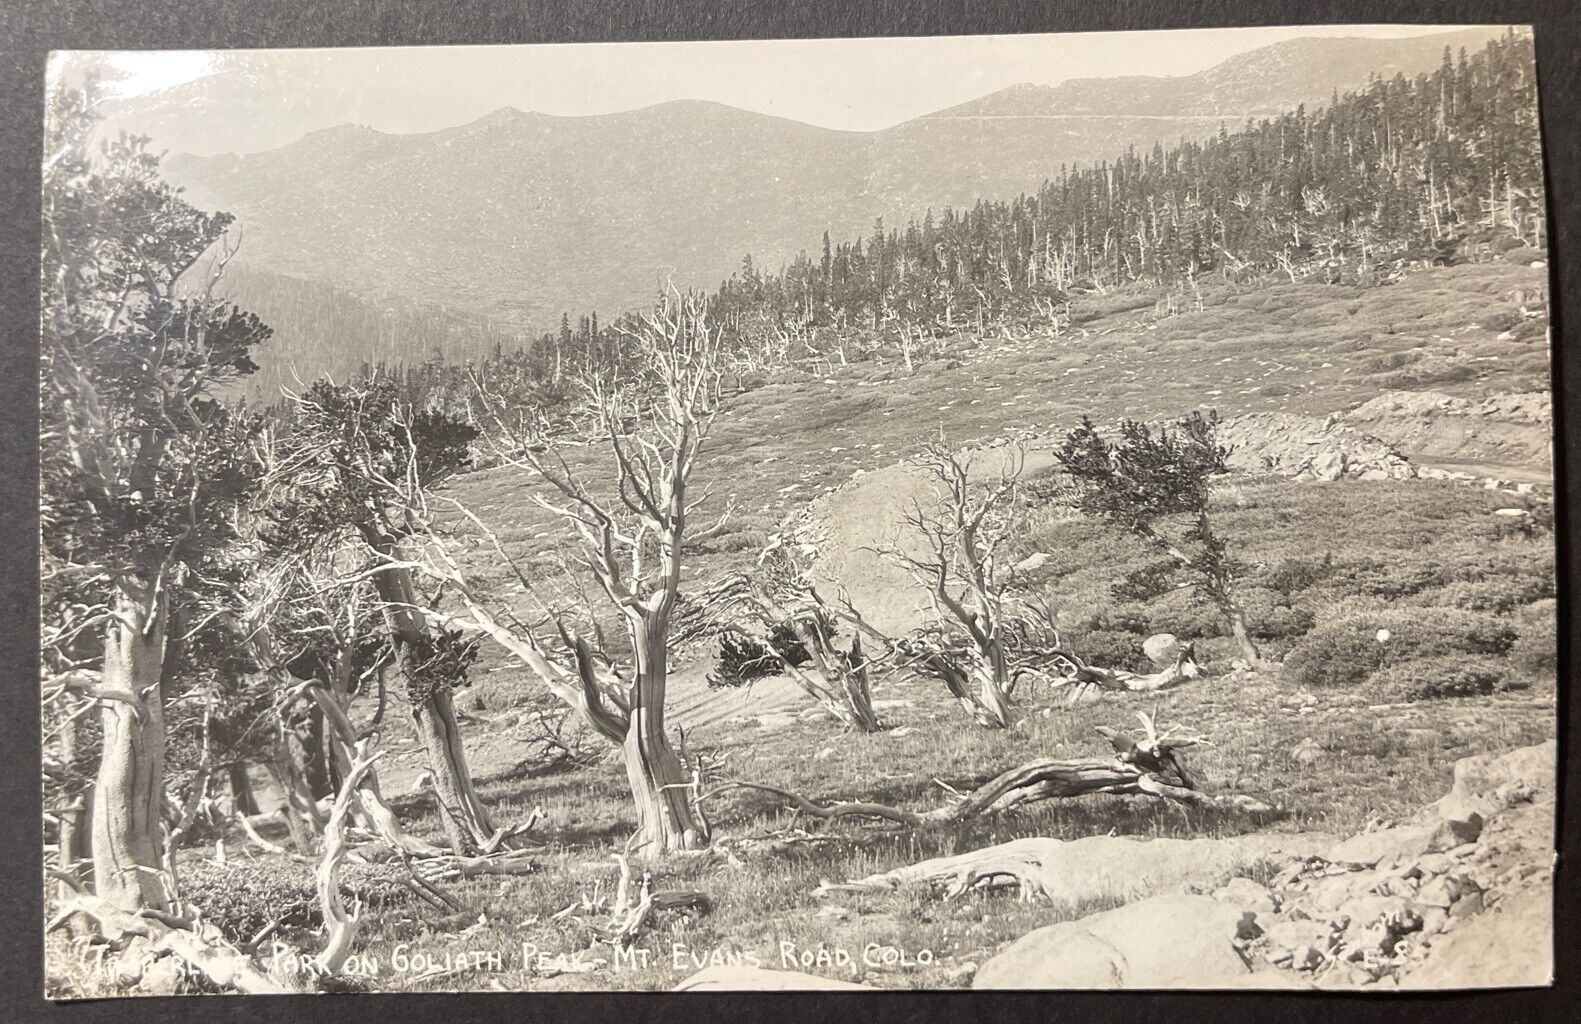 Timberline Park on Goliath Peak Mt Evans Road Colorado RPPC Sanborn E-858 1949